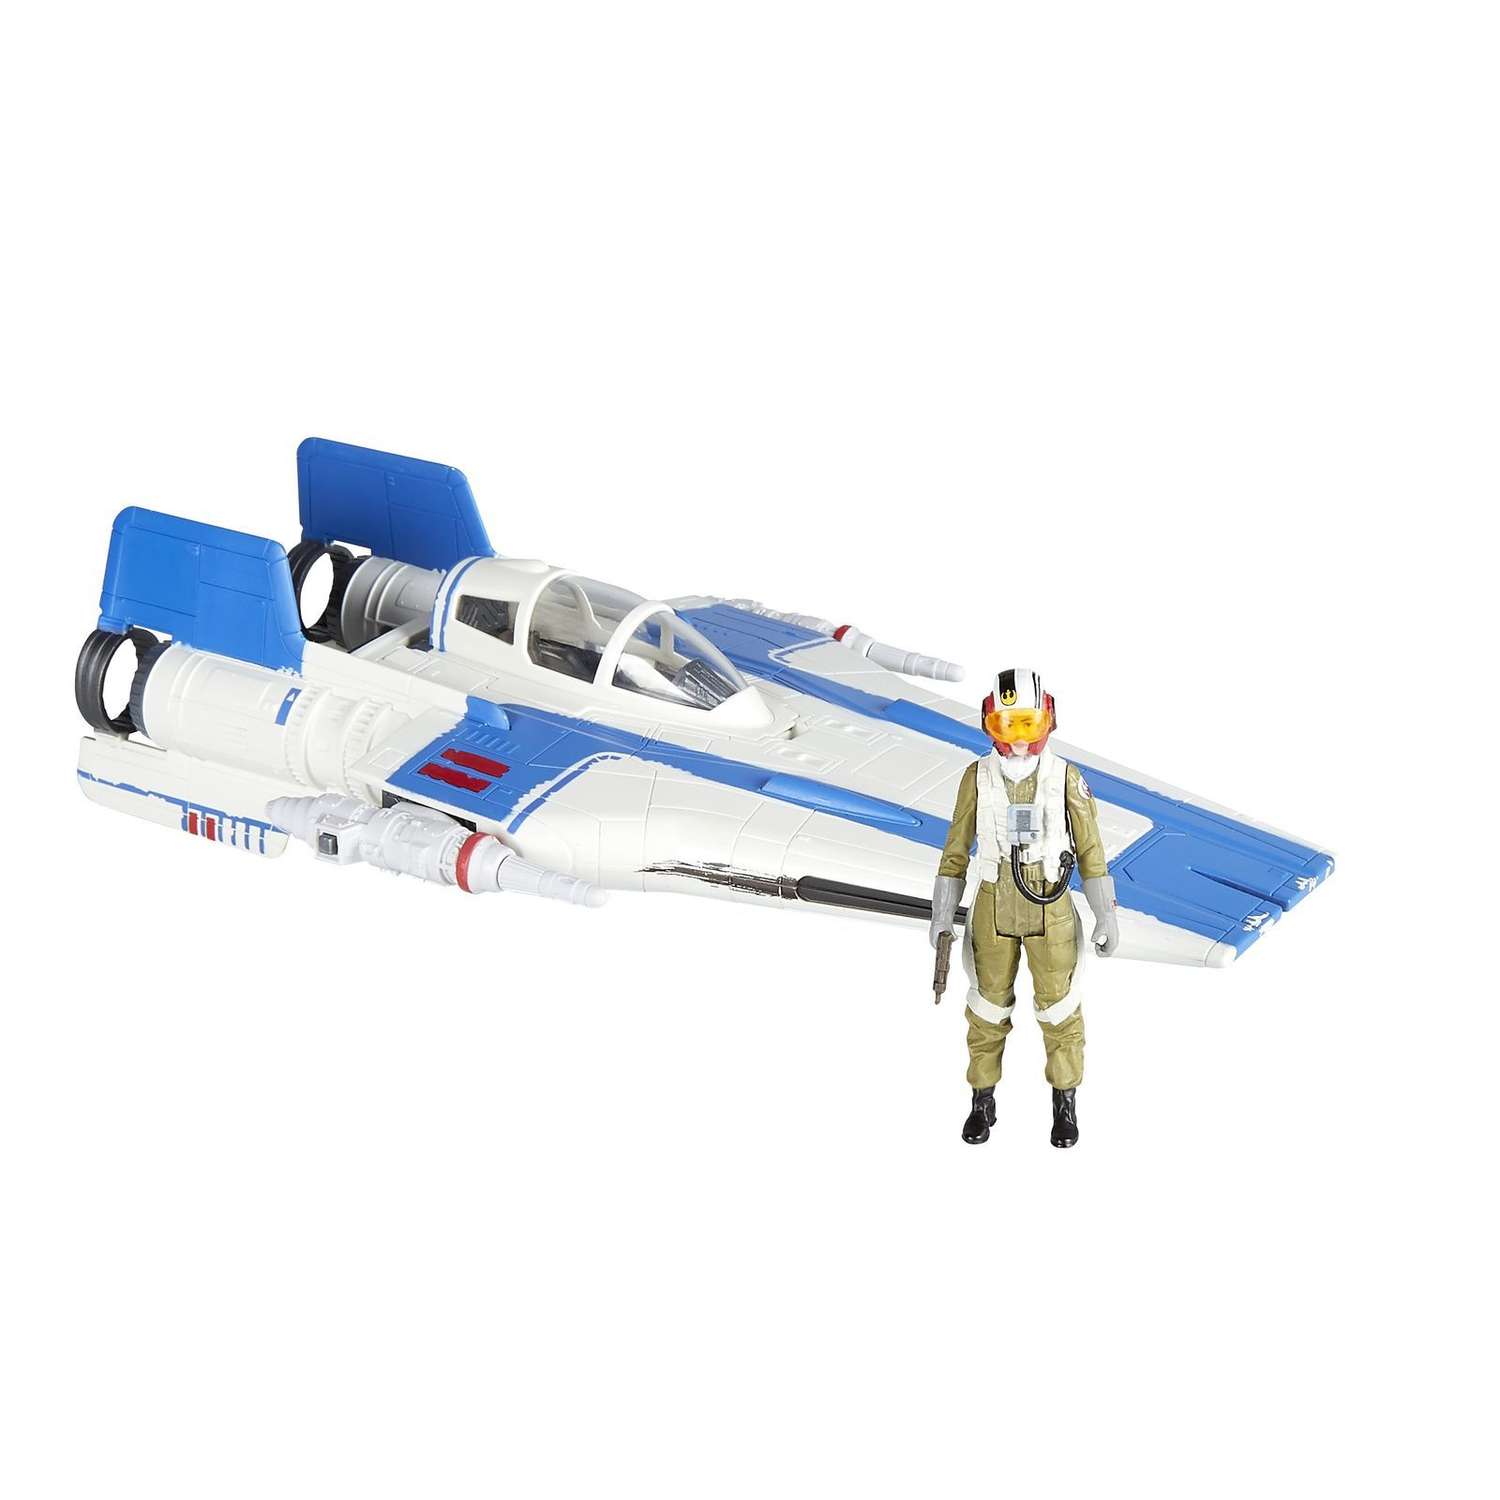 Игрушка Star Wars (SW) Транспорт Звездный истребитель a wing E1264EU4 E0326EU4 - фото 3